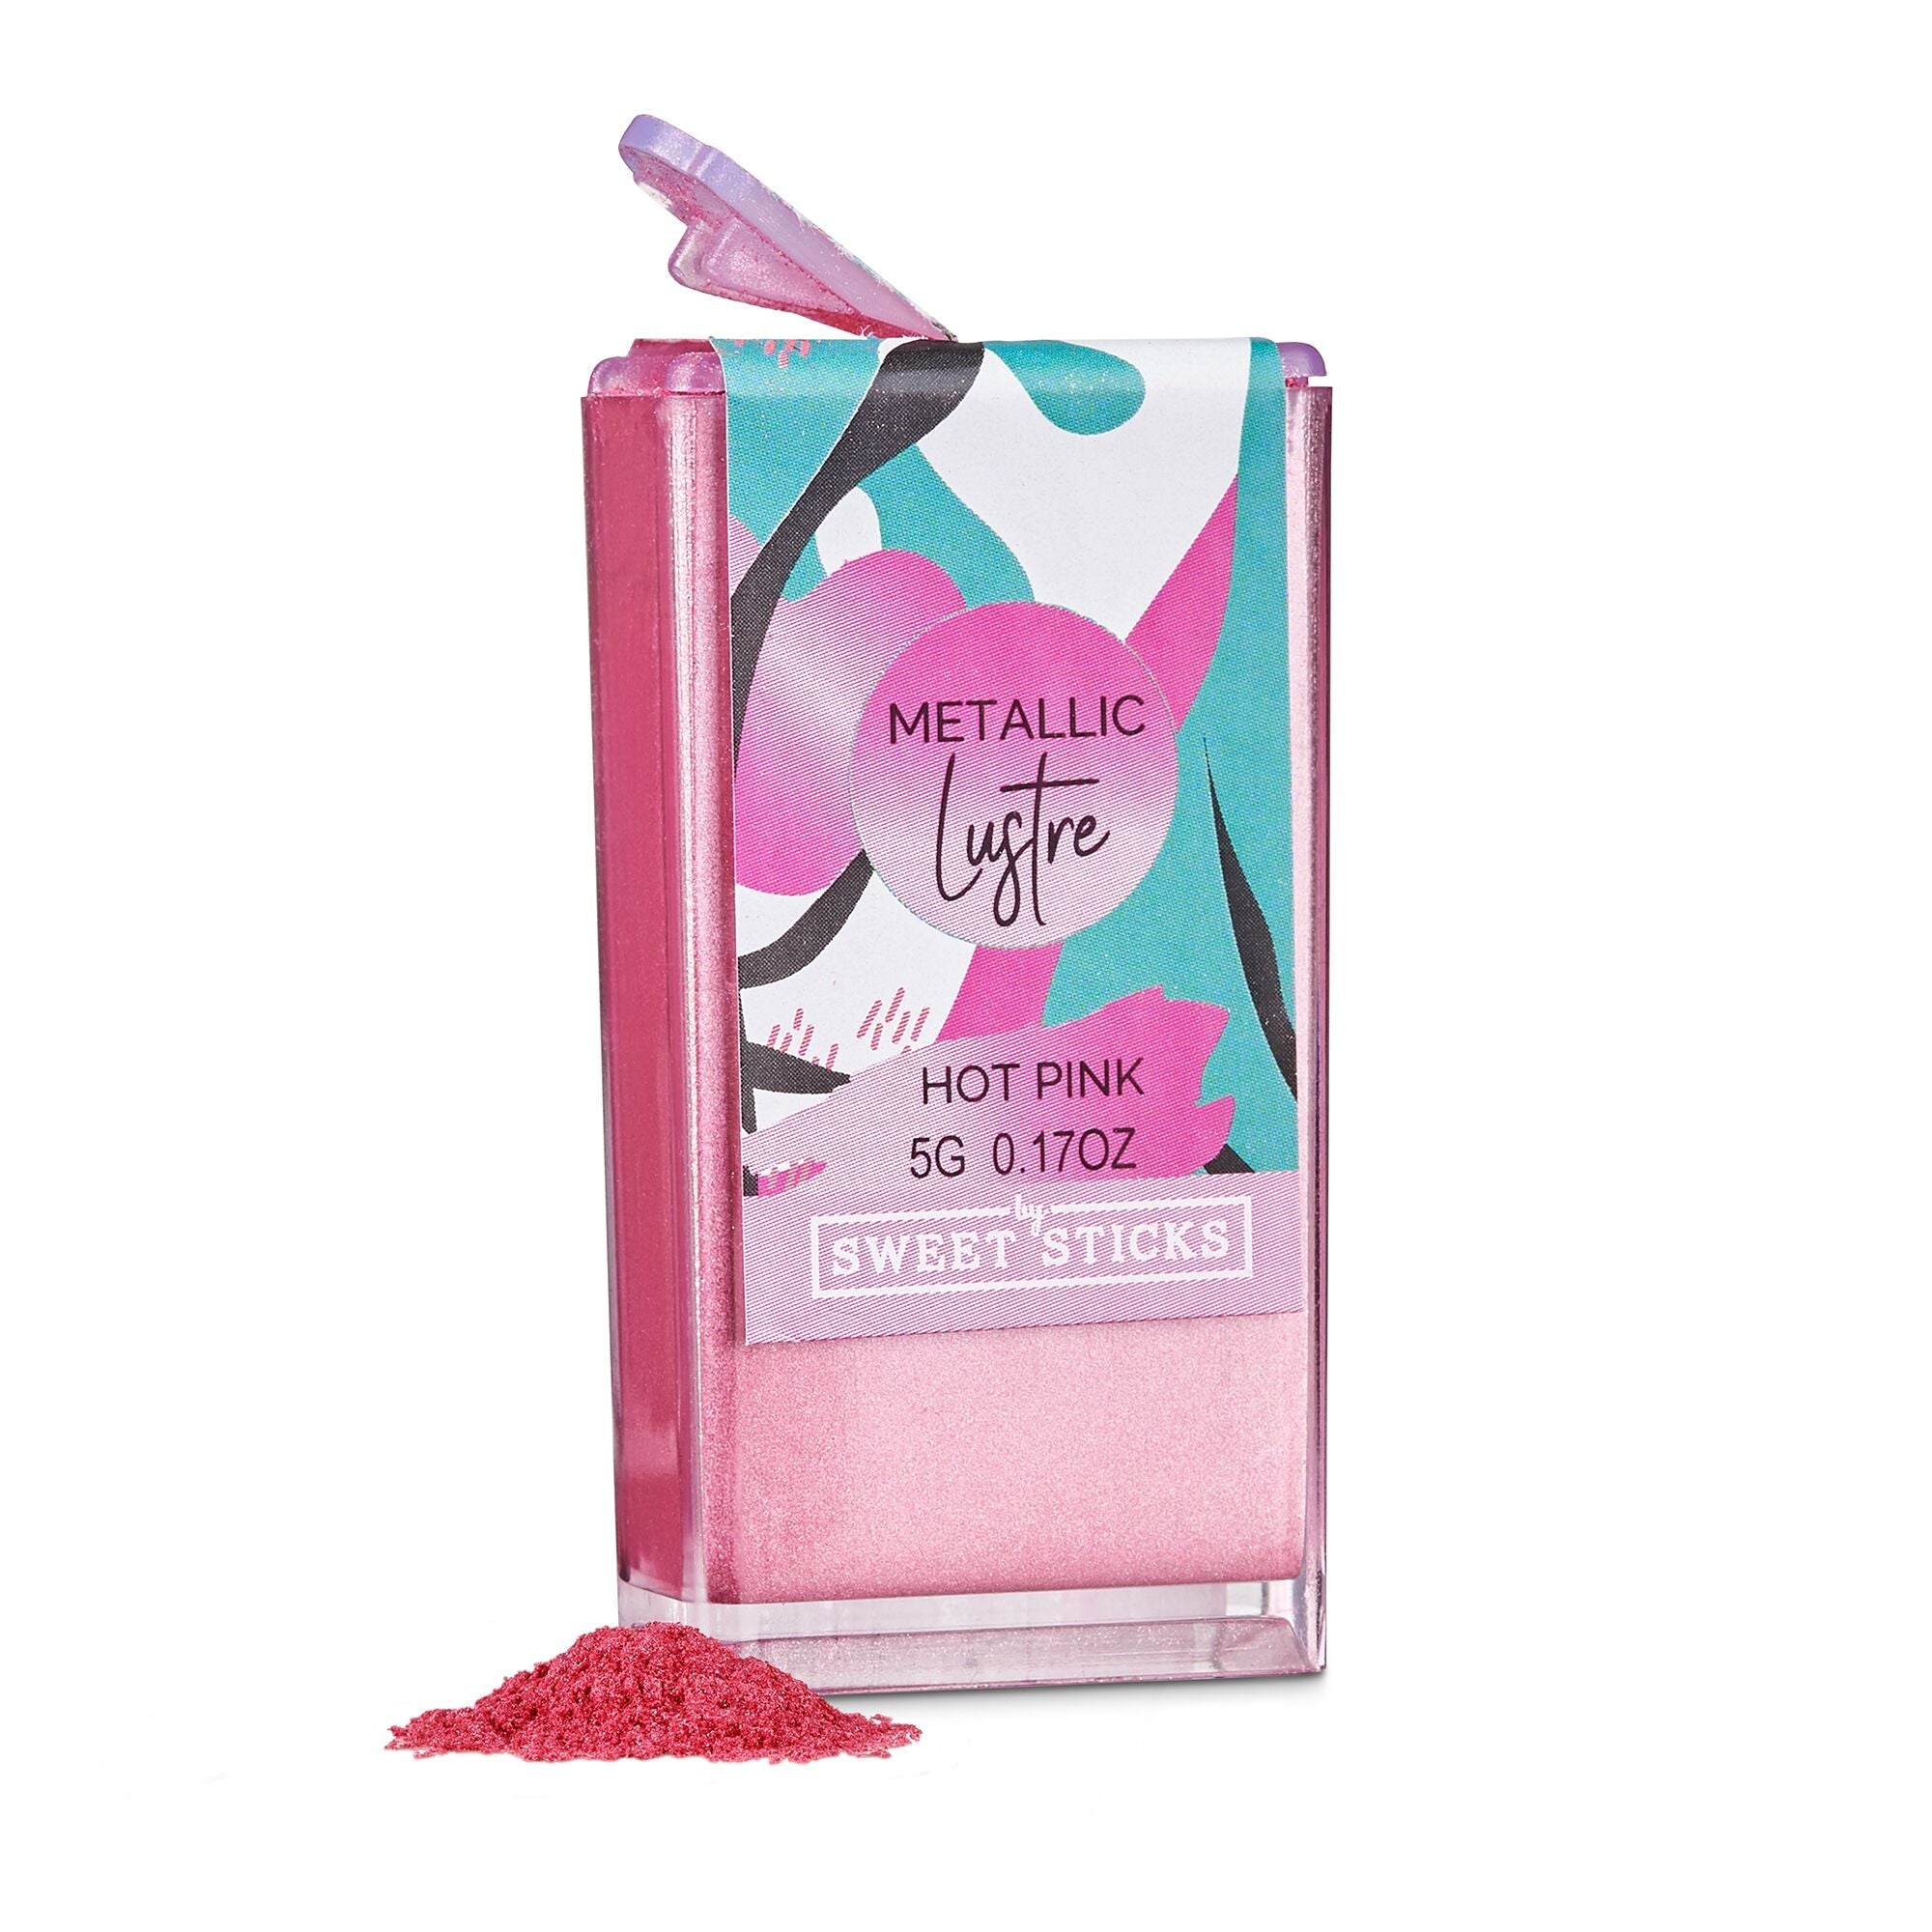 SWEETSTICKS 100% Edible Metallic Lustre Dust - 5g - Hot Pink